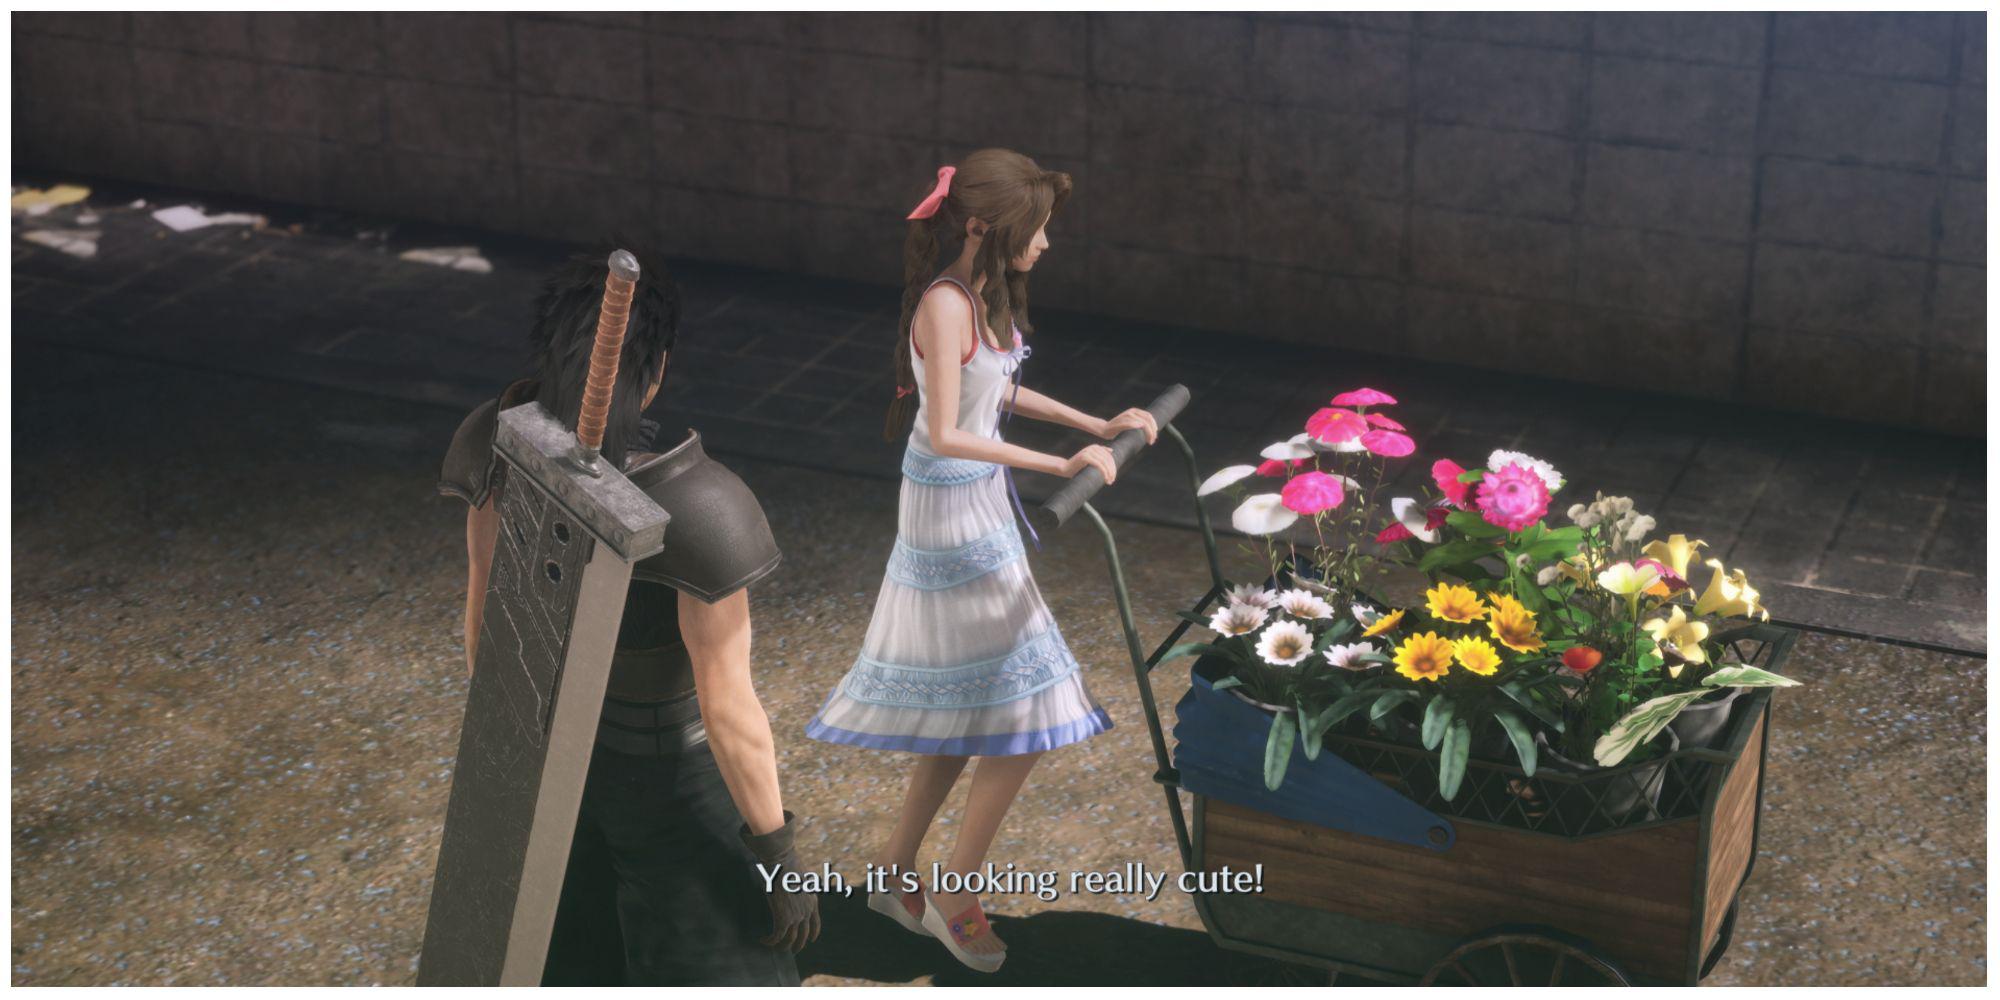 Crisis Core: Final Fantasy 7 Reunion - Flower Wagon Guide